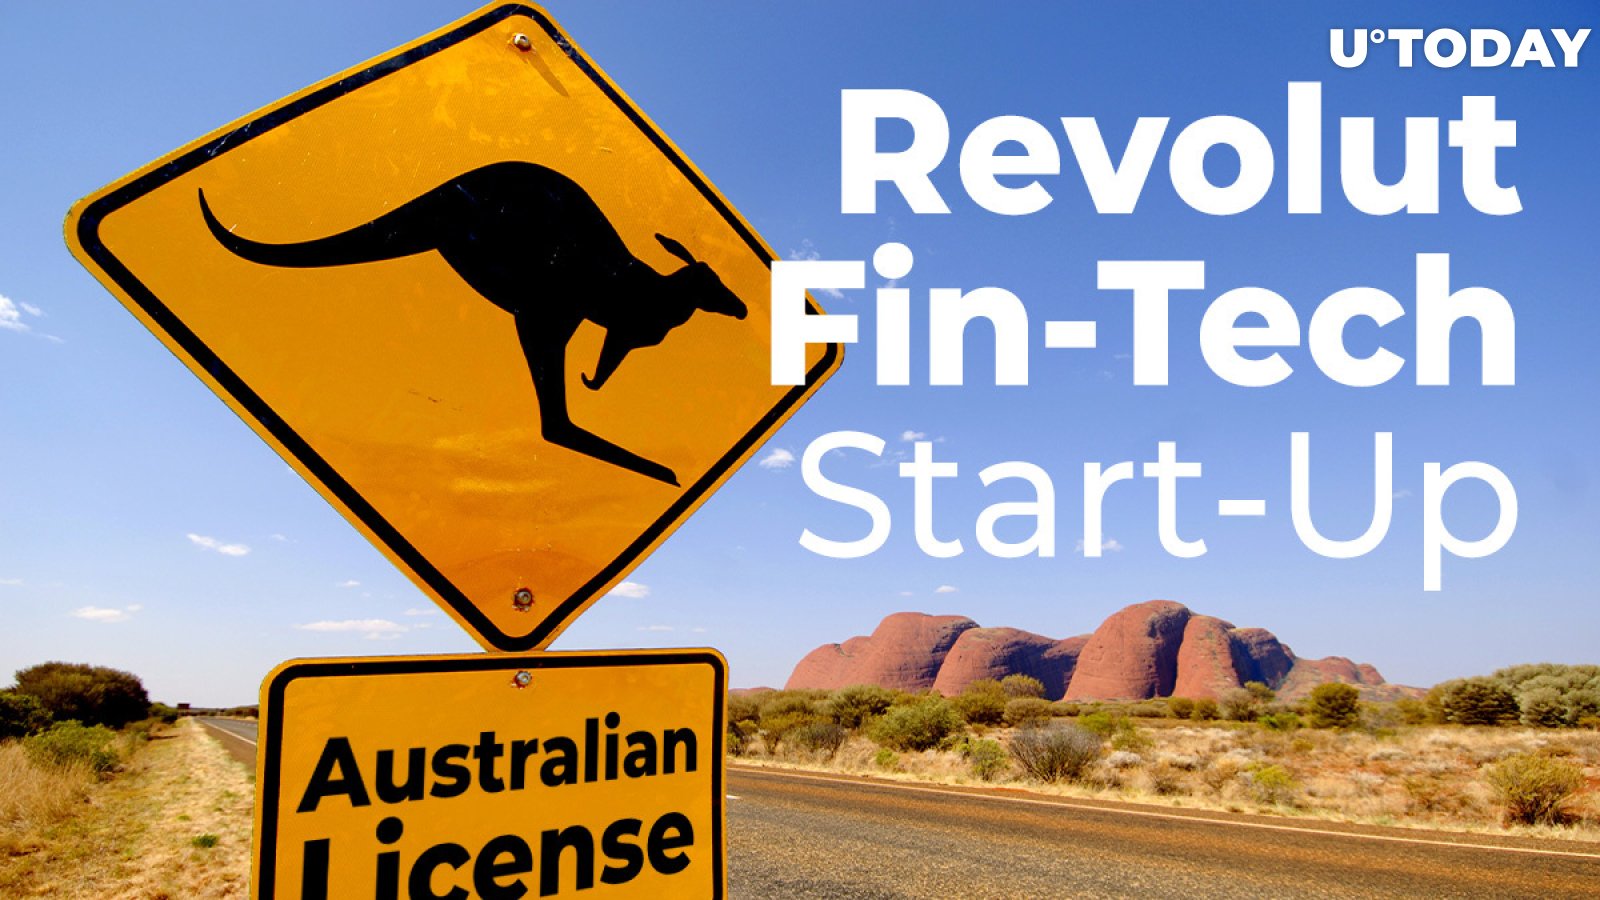 Revolut Fintech Startup Obtains Australian License: Details